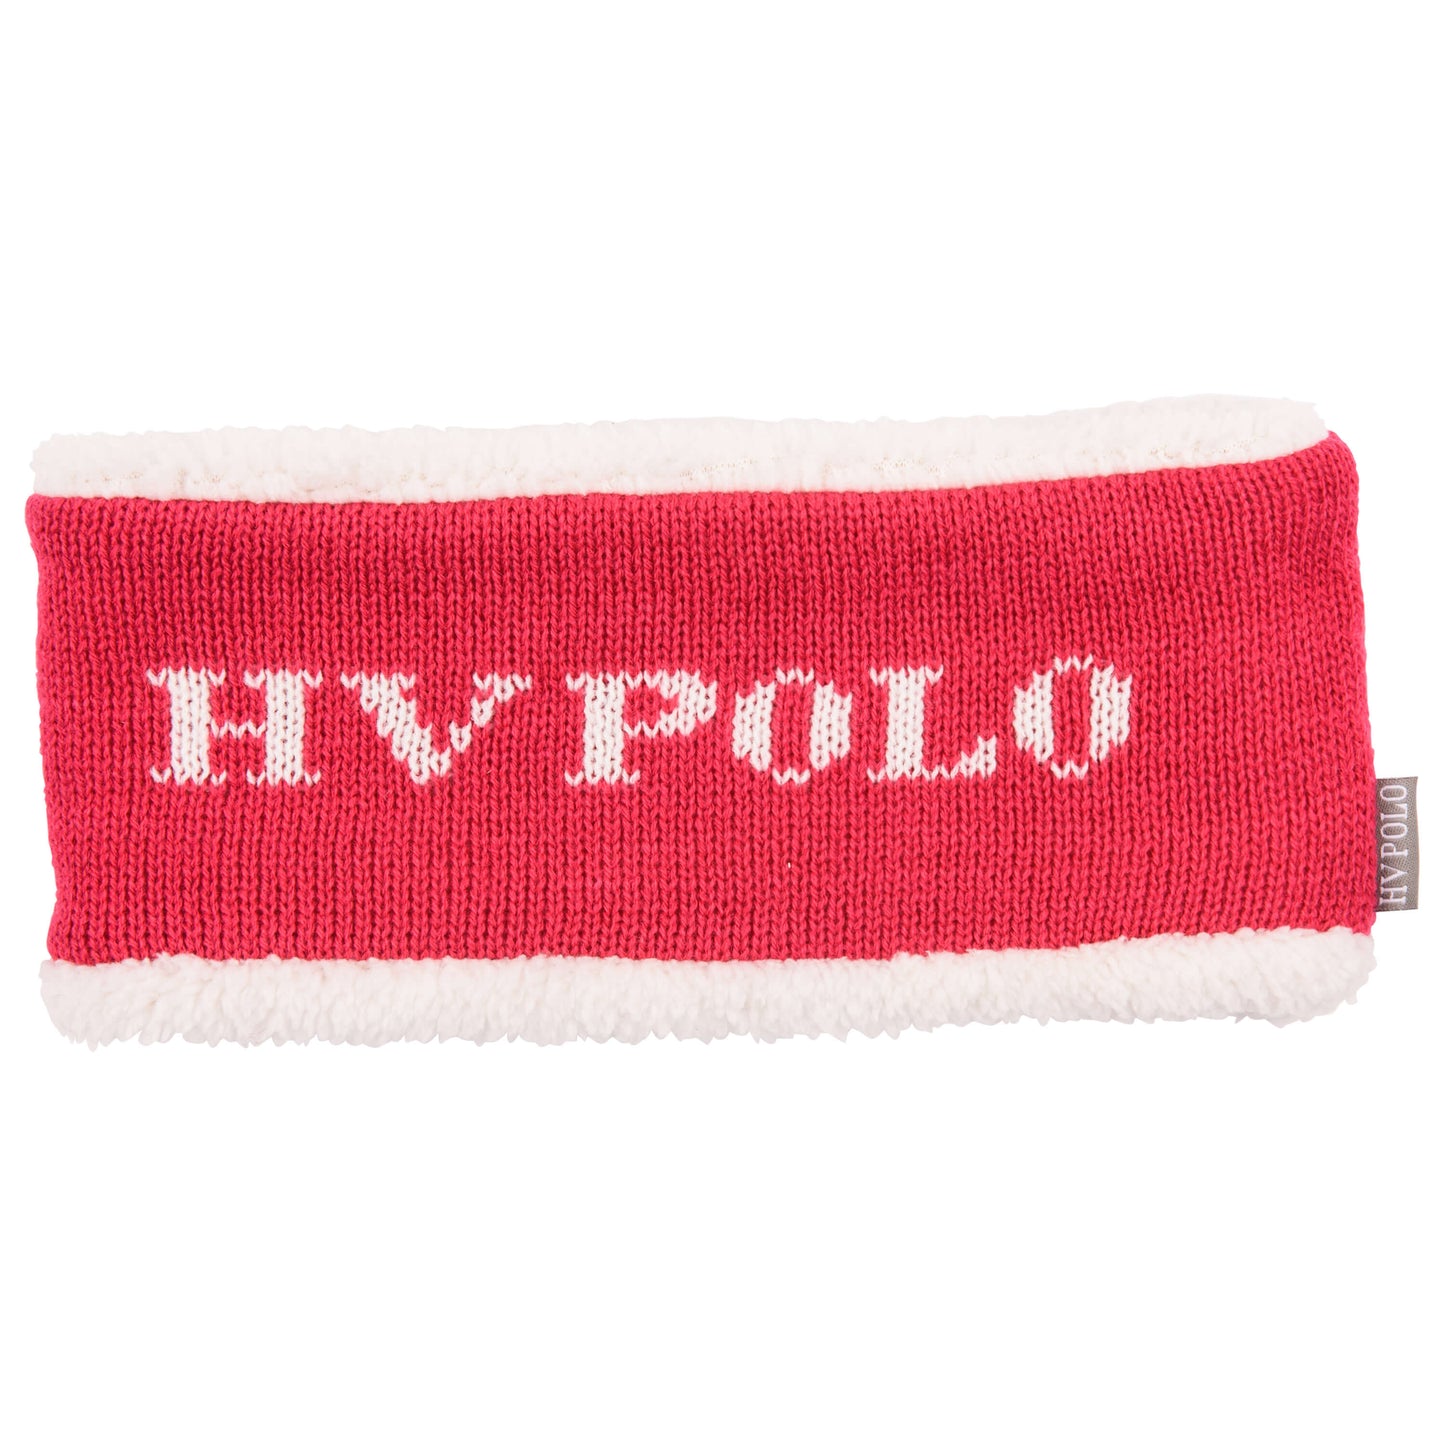 HV Polo Headband Belleville, fint stickat pannband i flera färger